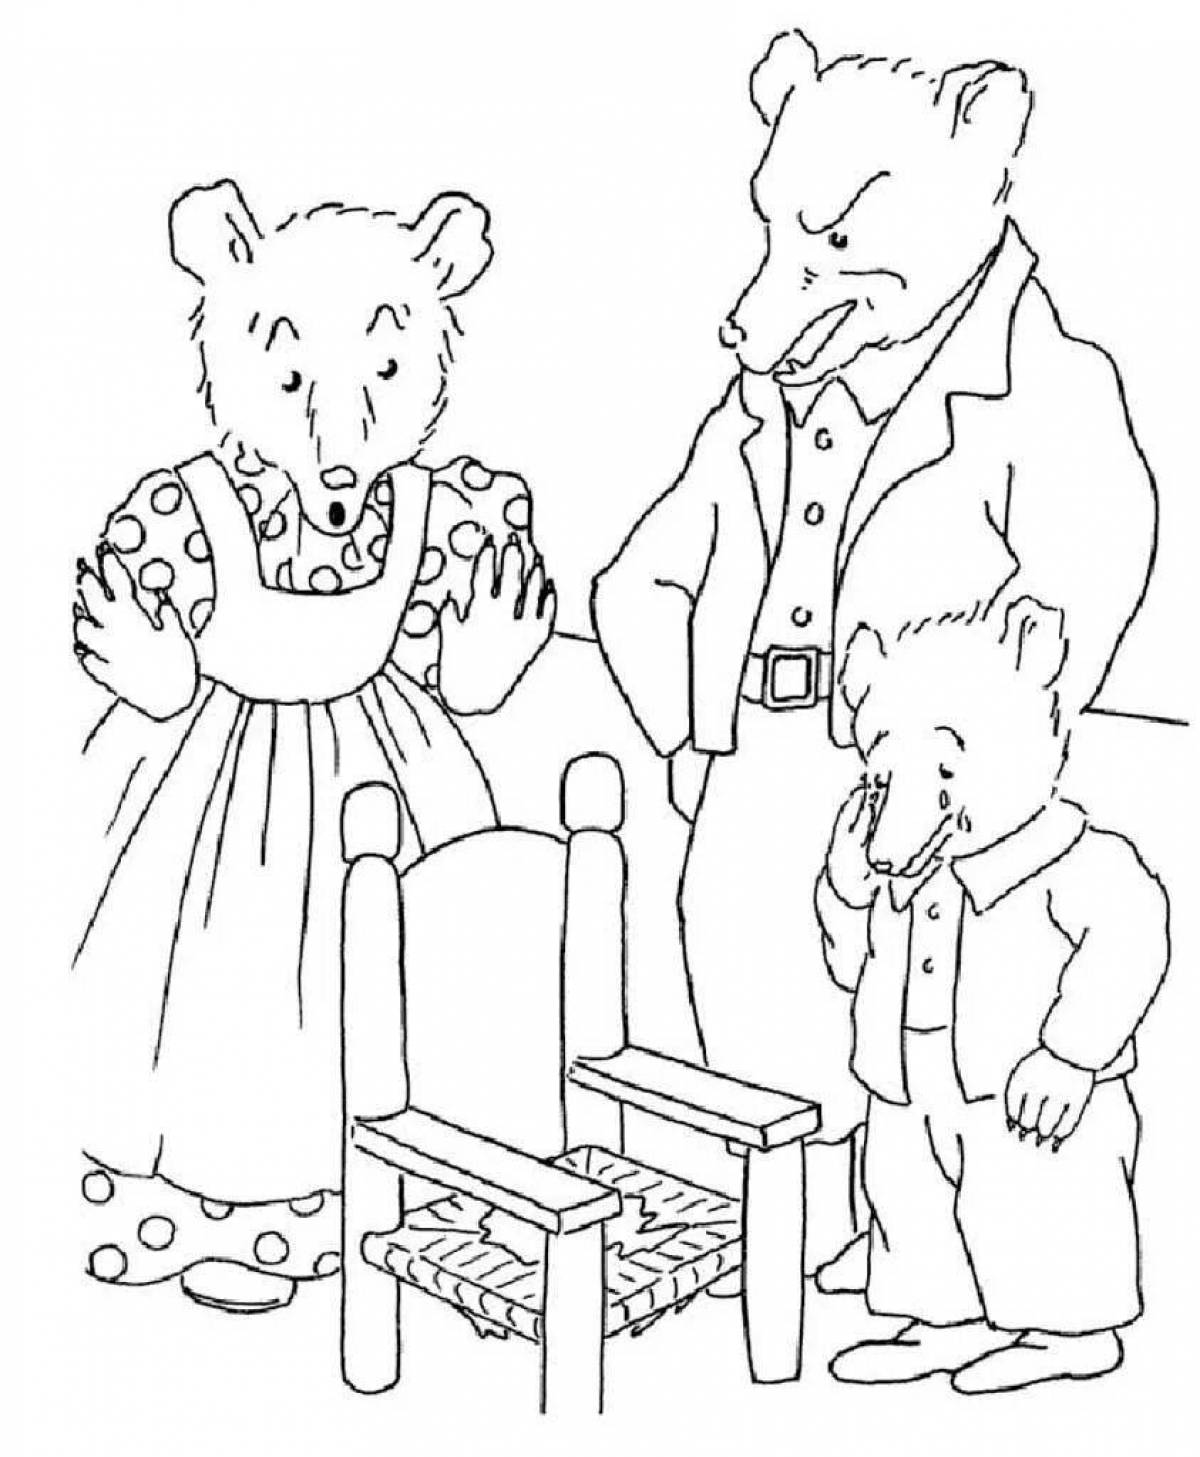 Three bear glowing coloring book